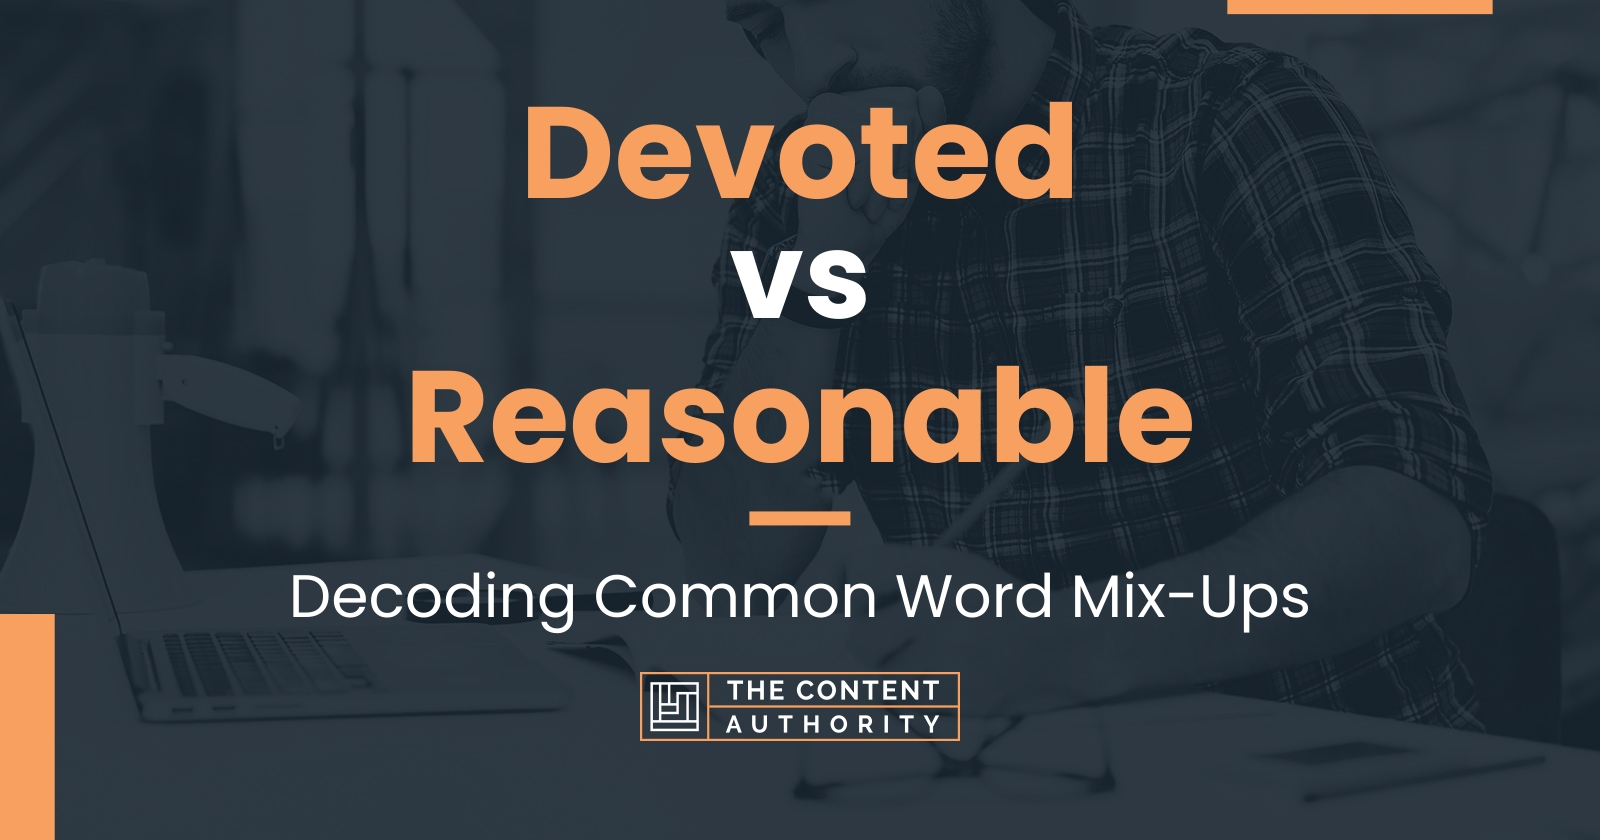 Devoted vs Reasonable: Decoding Common Word Mix-Ups